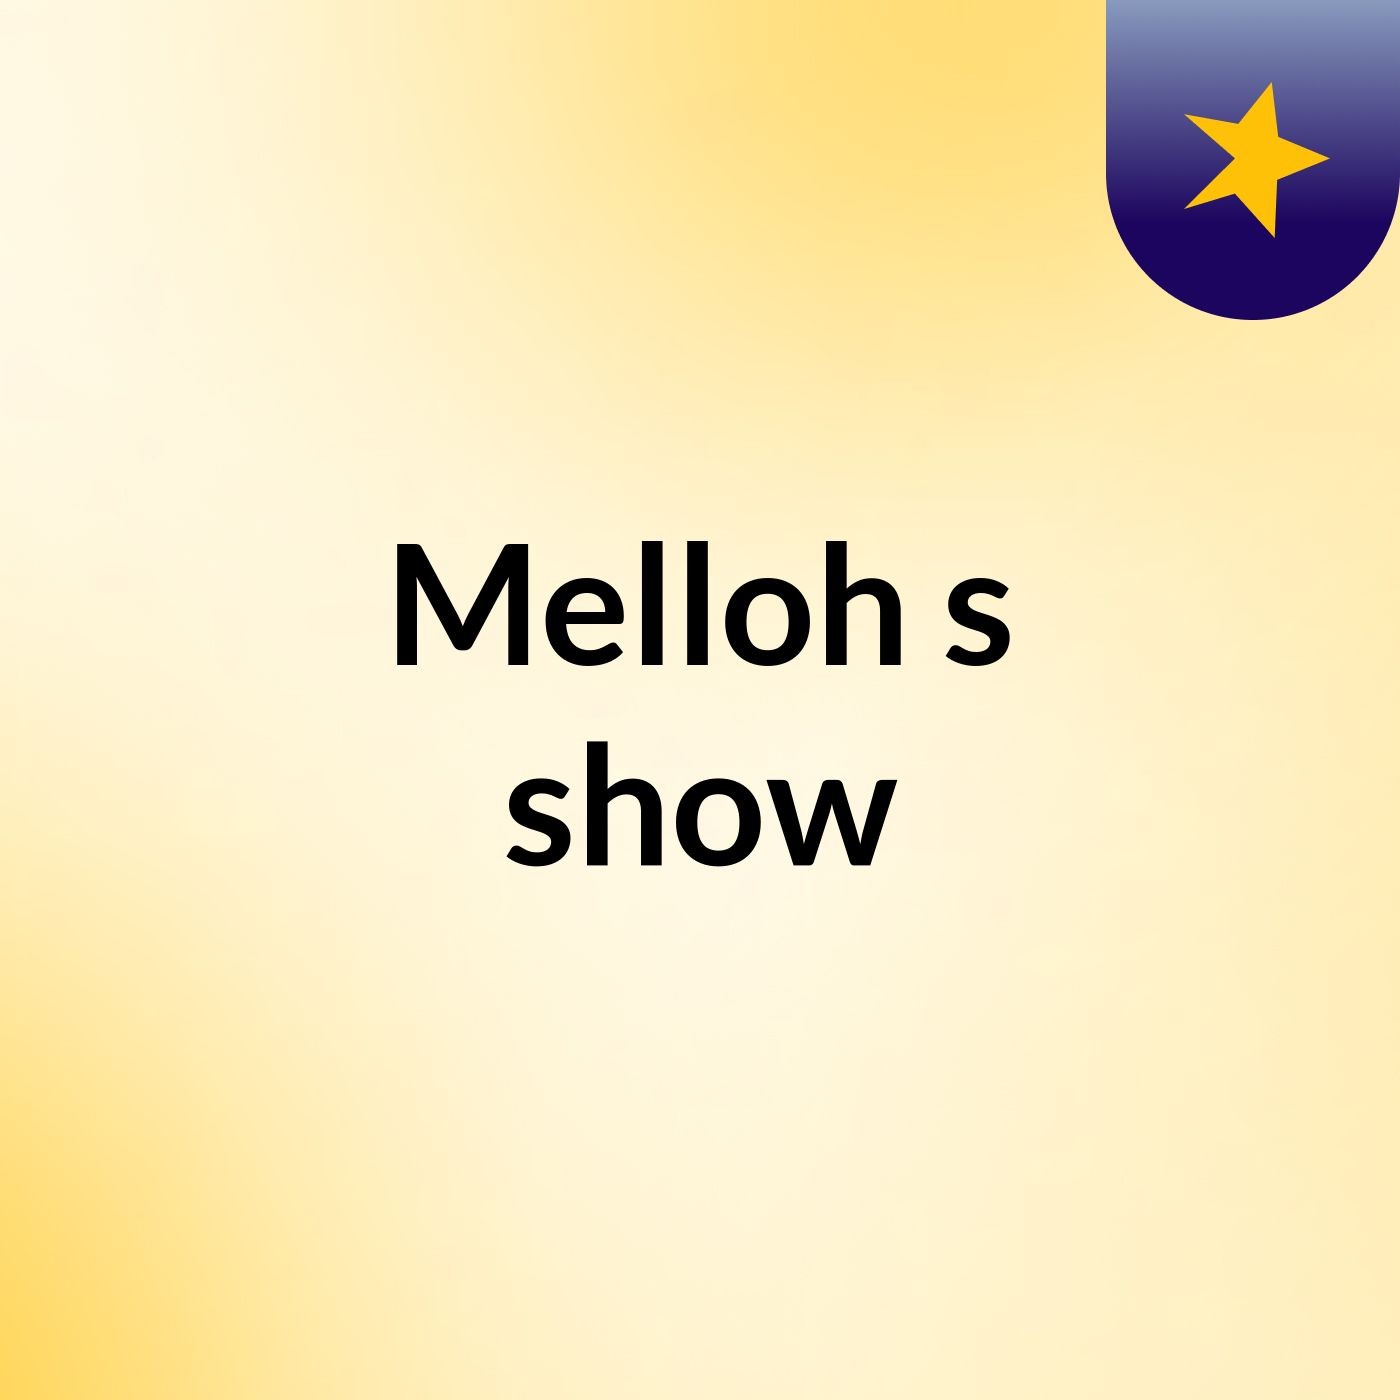 Melloh's show